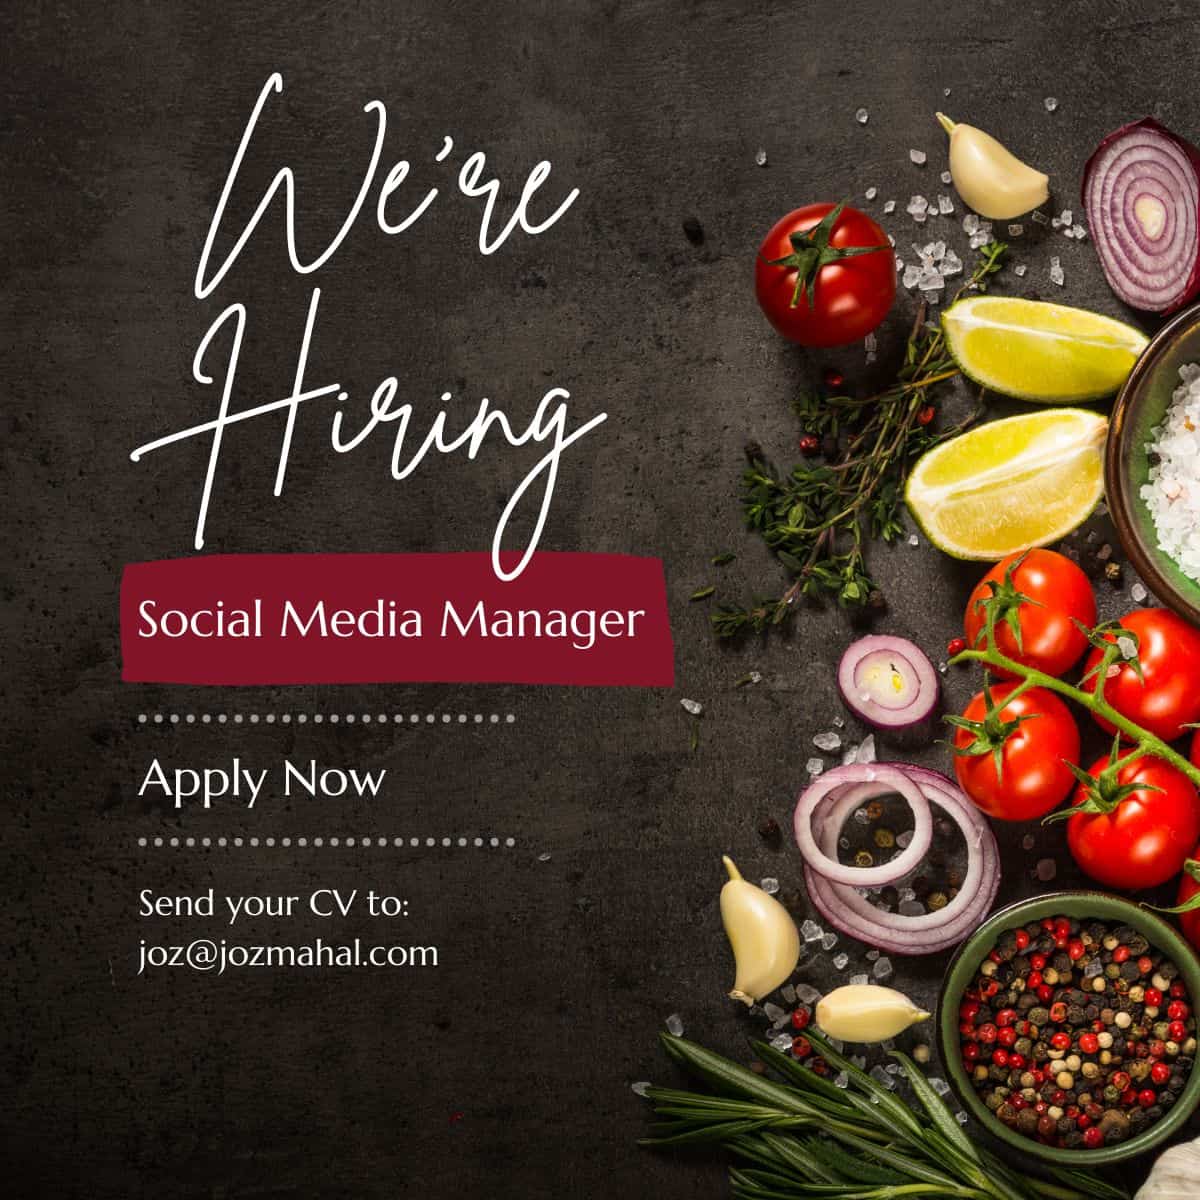 Job ad for social media manager.